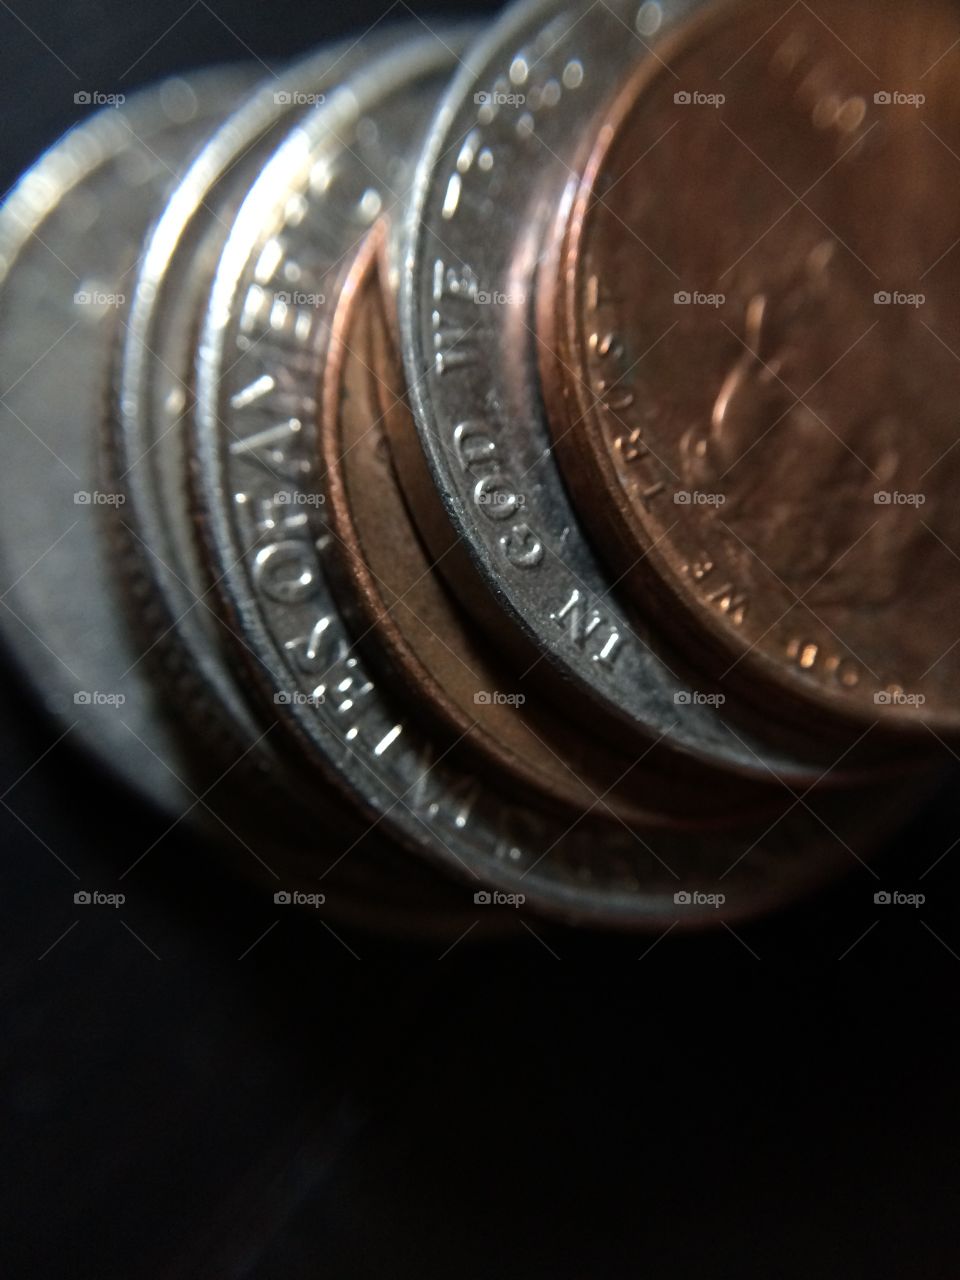 Coins closeup 